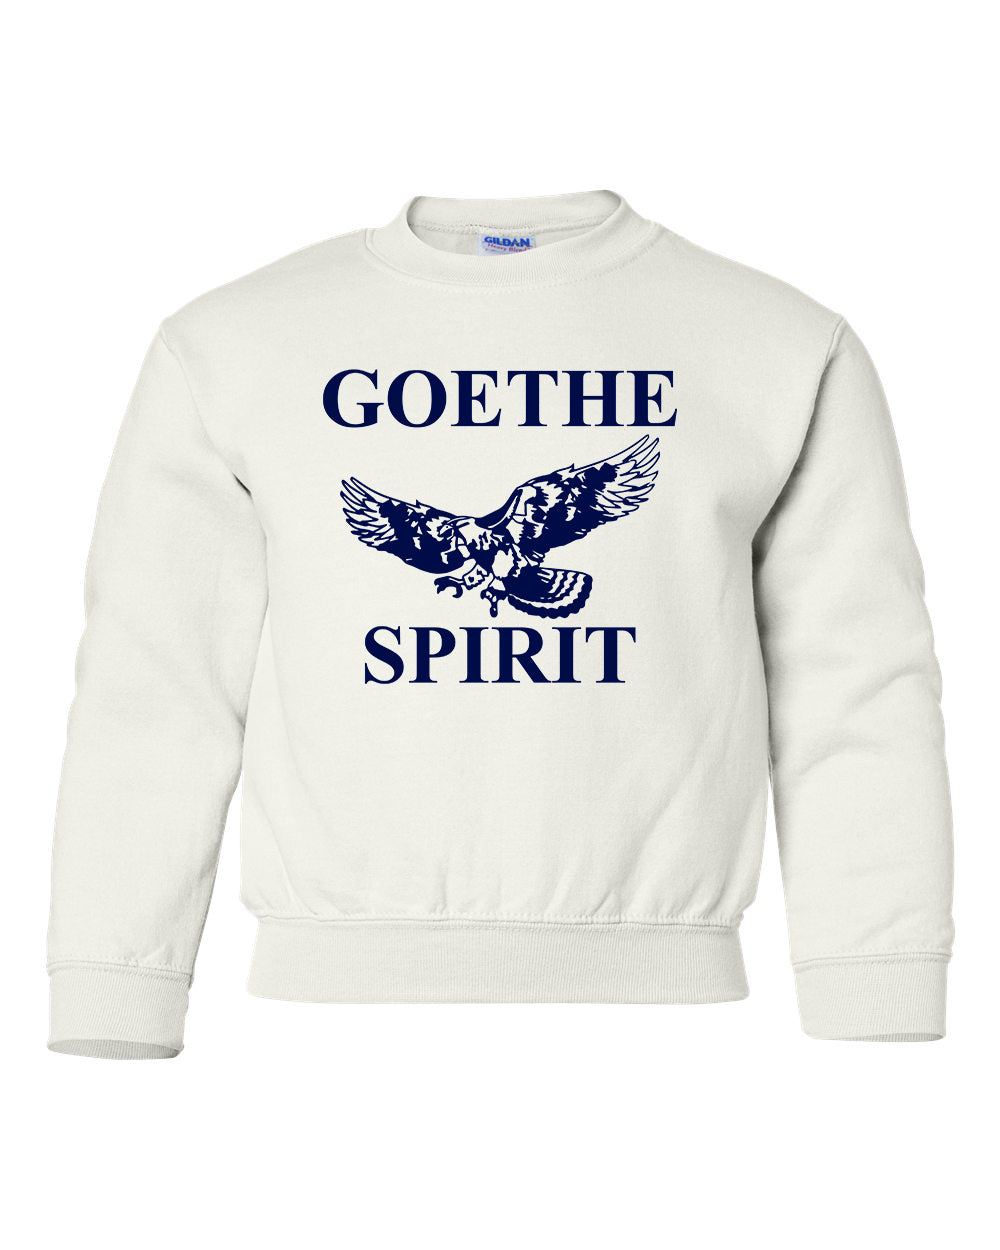 Goethe Spirit - Vintage Eagle - Youth Crewneck (White)